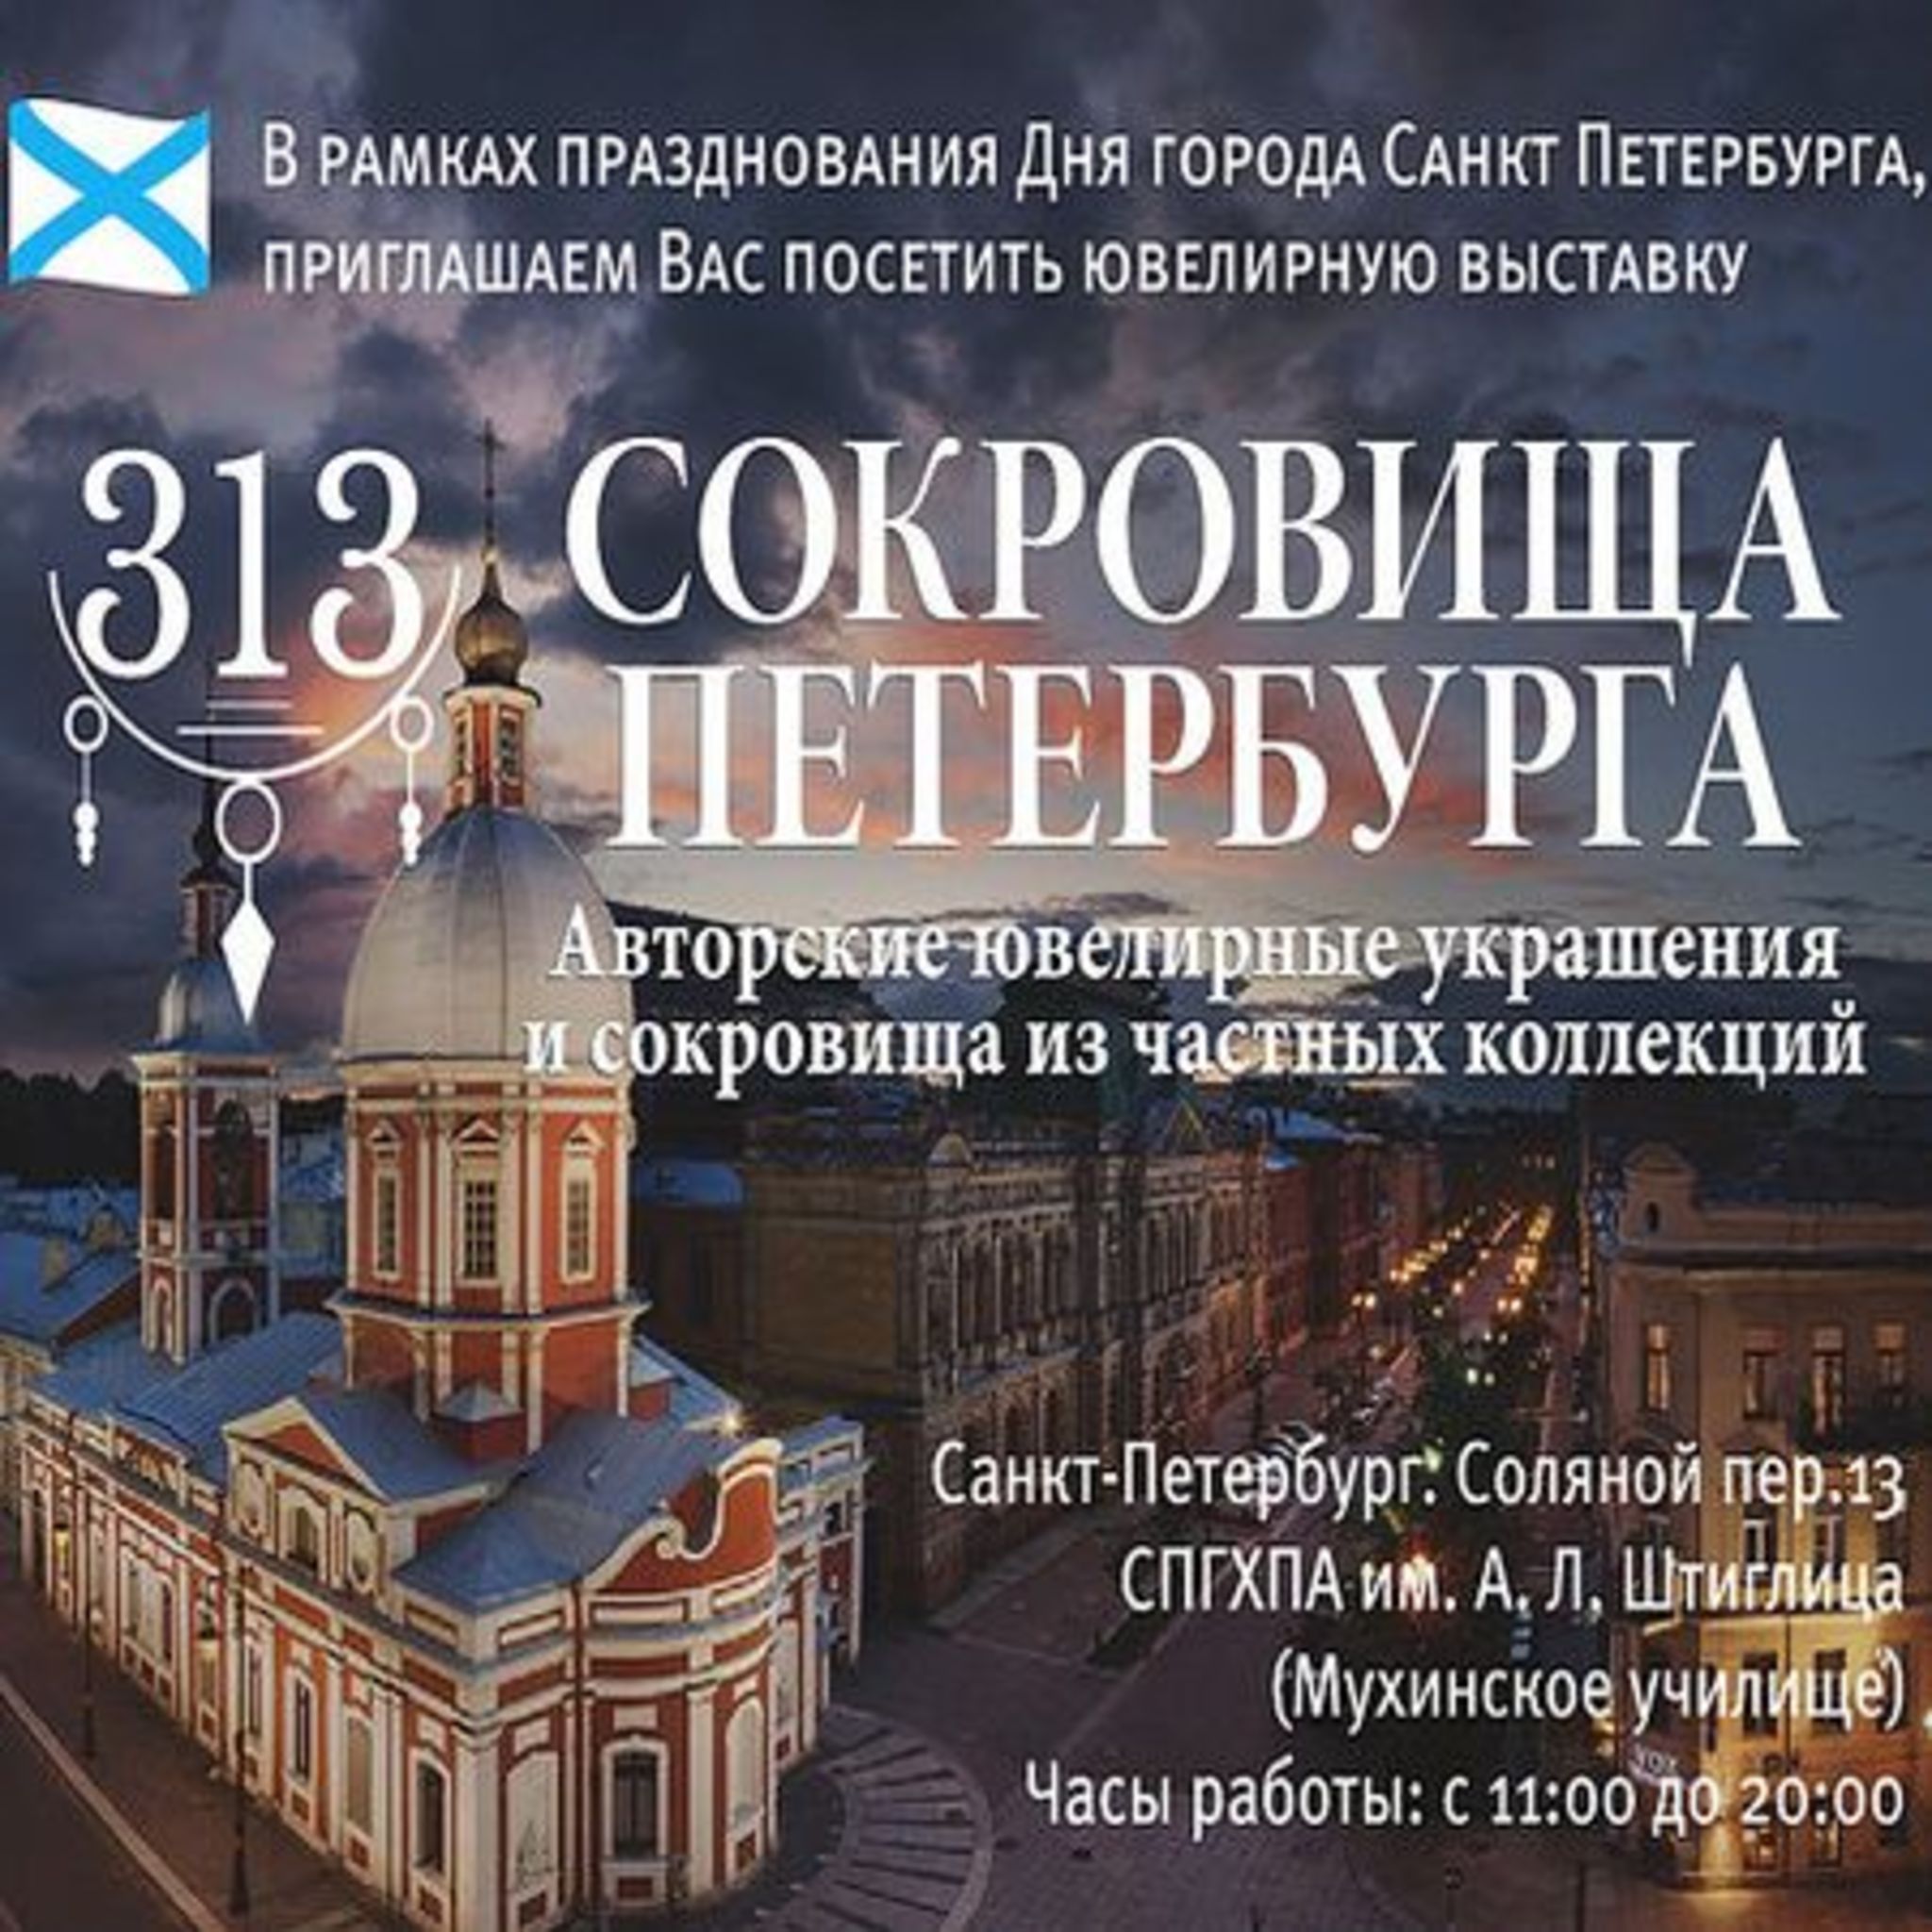 The exhibition Treasures of St. Petersburg